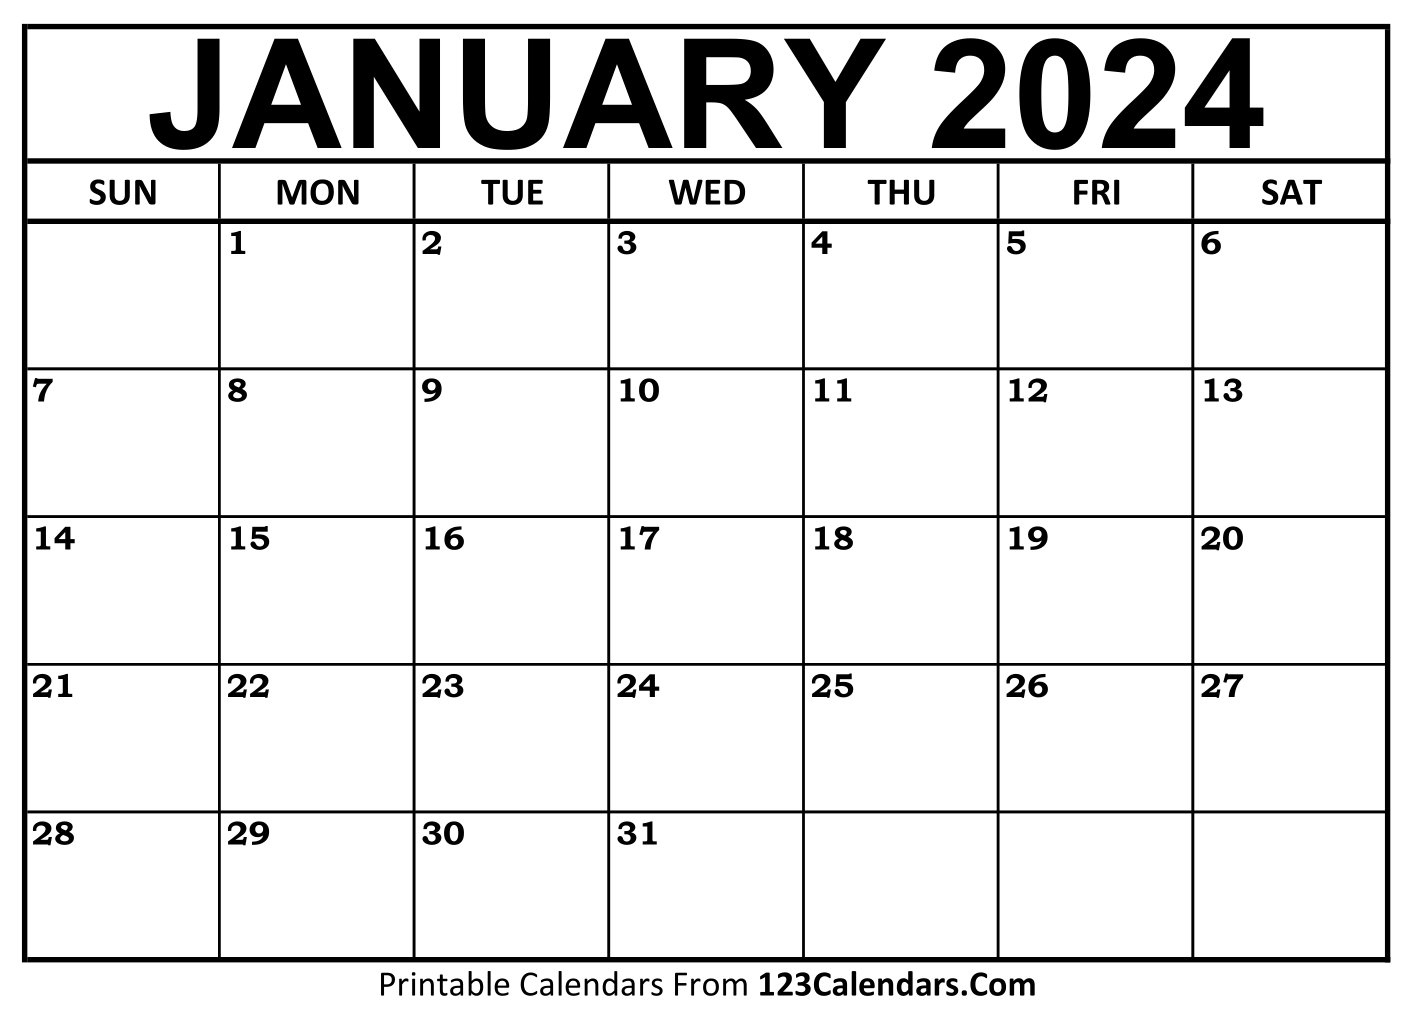 Printable January 2024 Calendar Templates - 123Calendars | Printable Calendar 2024 Monthly